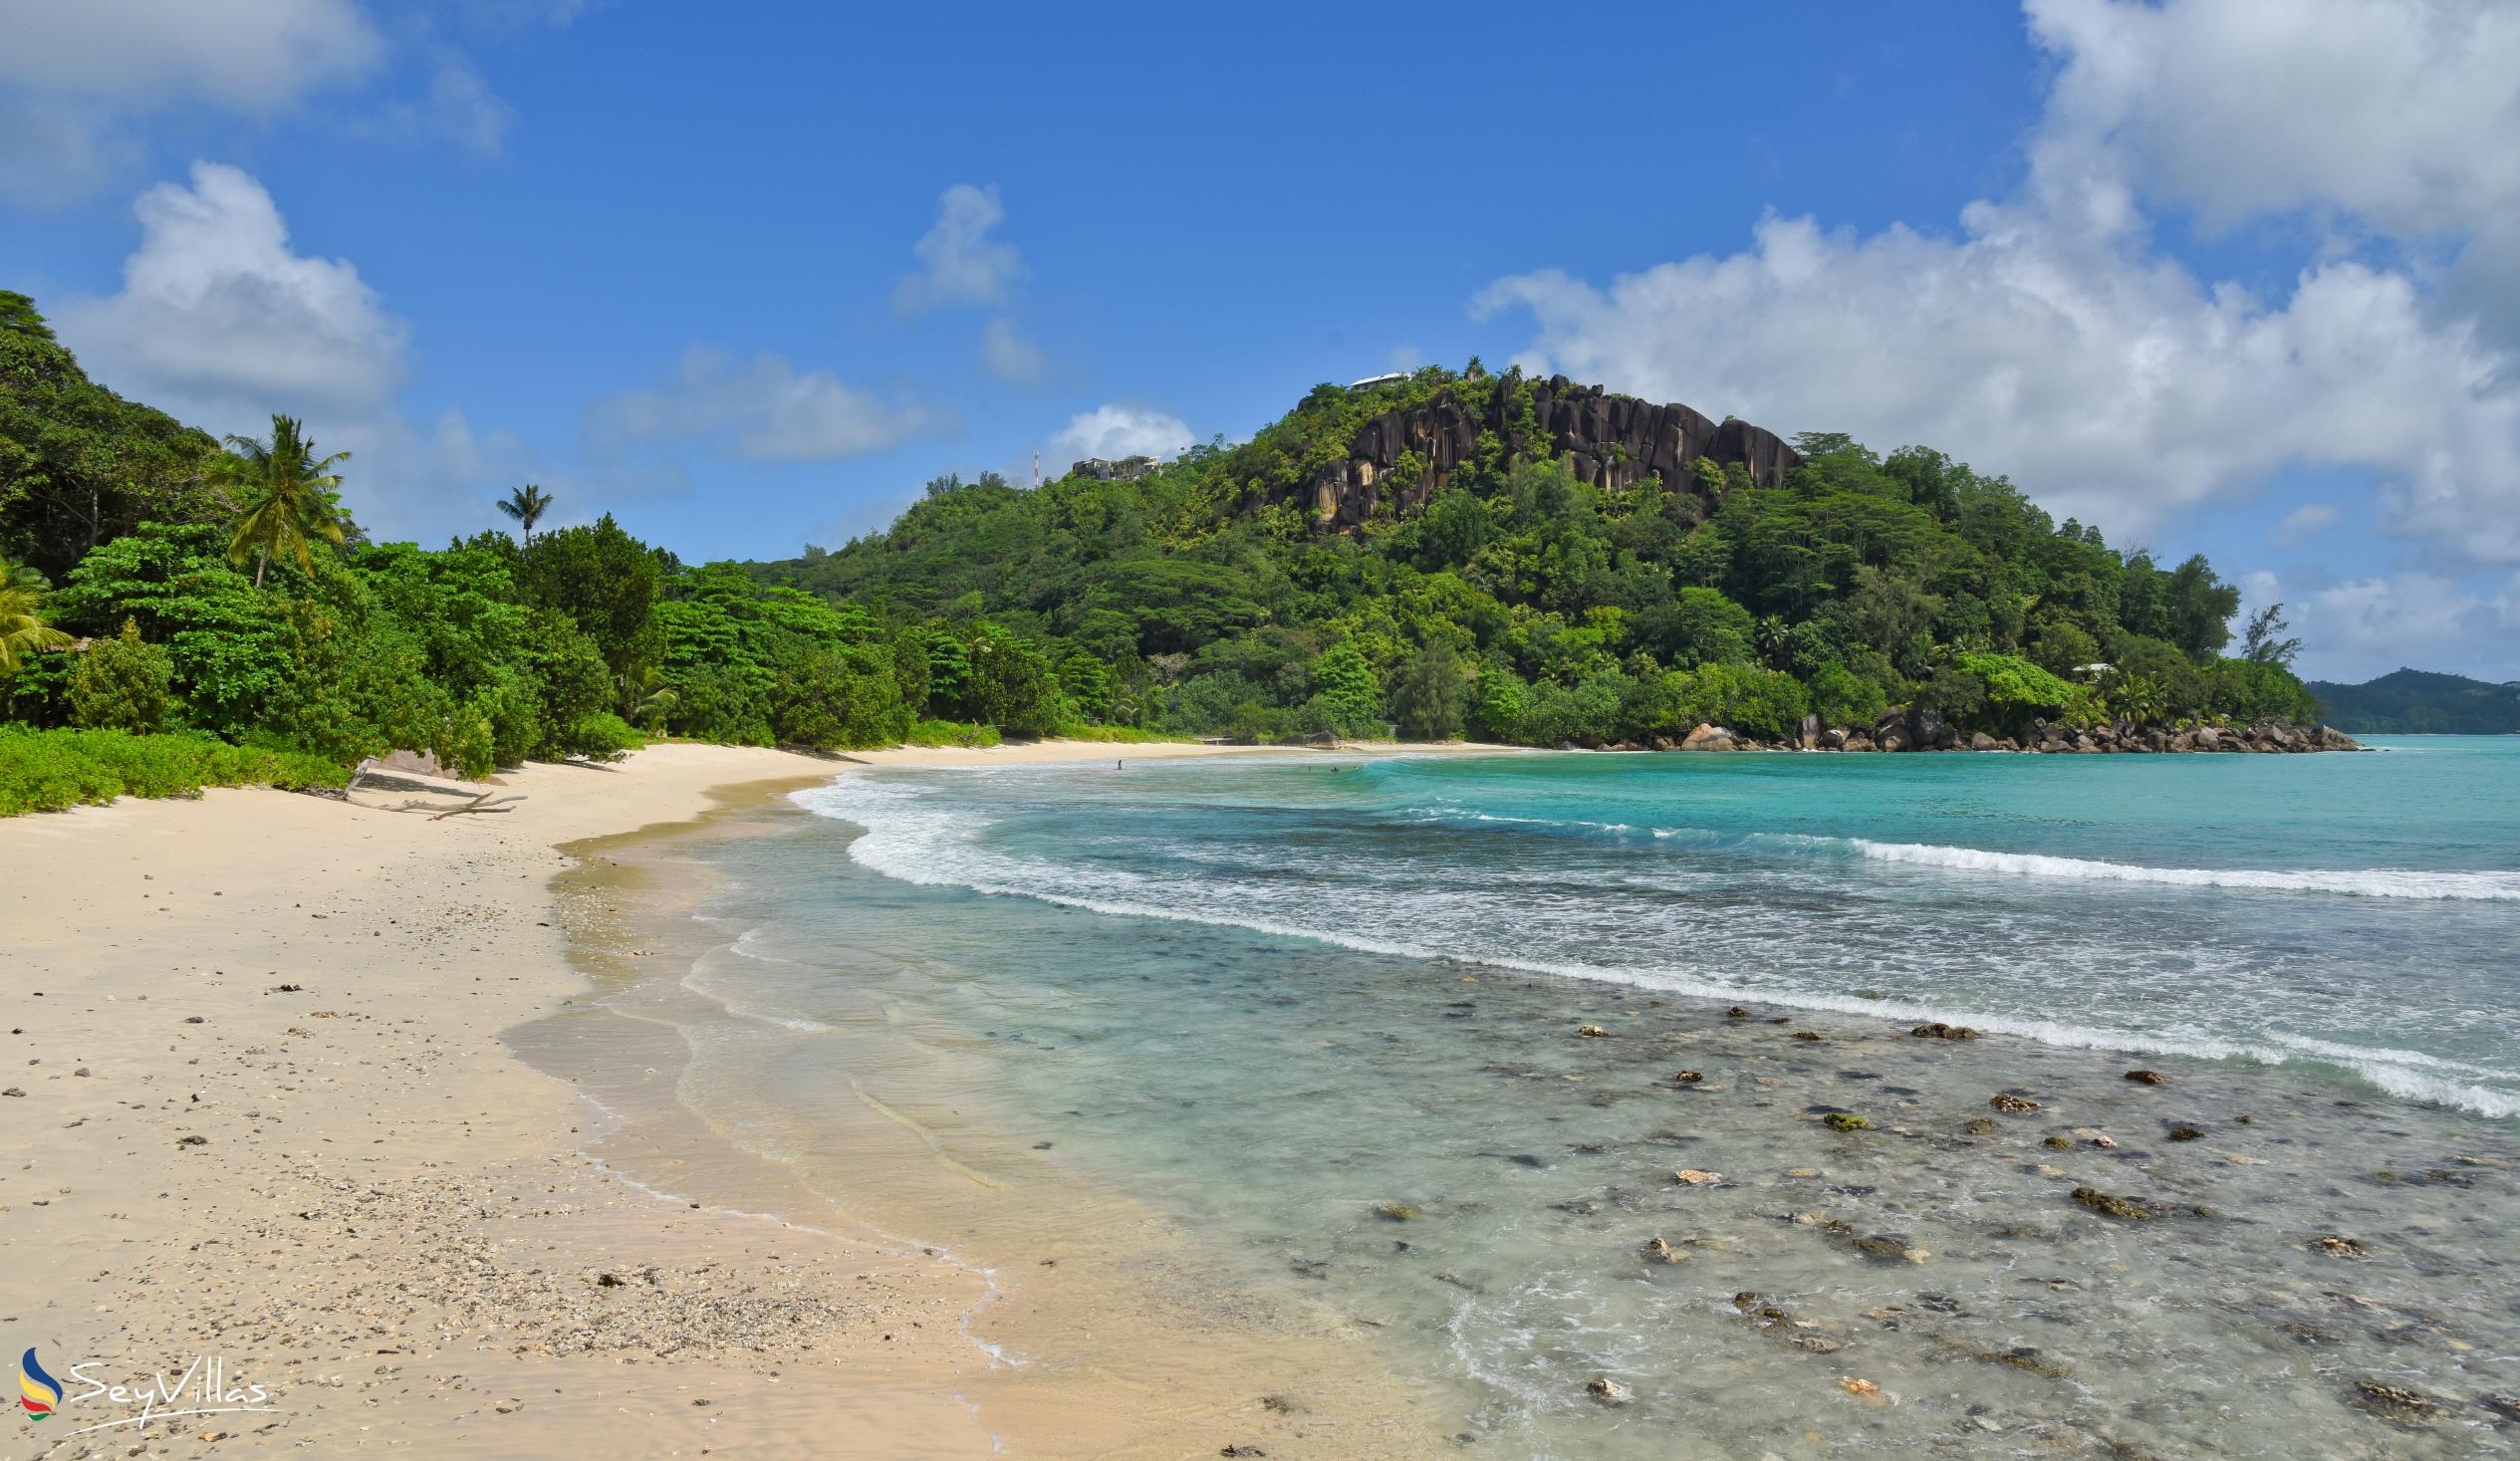 Photo 1: Anse Louis - Mahé (Seychelles)